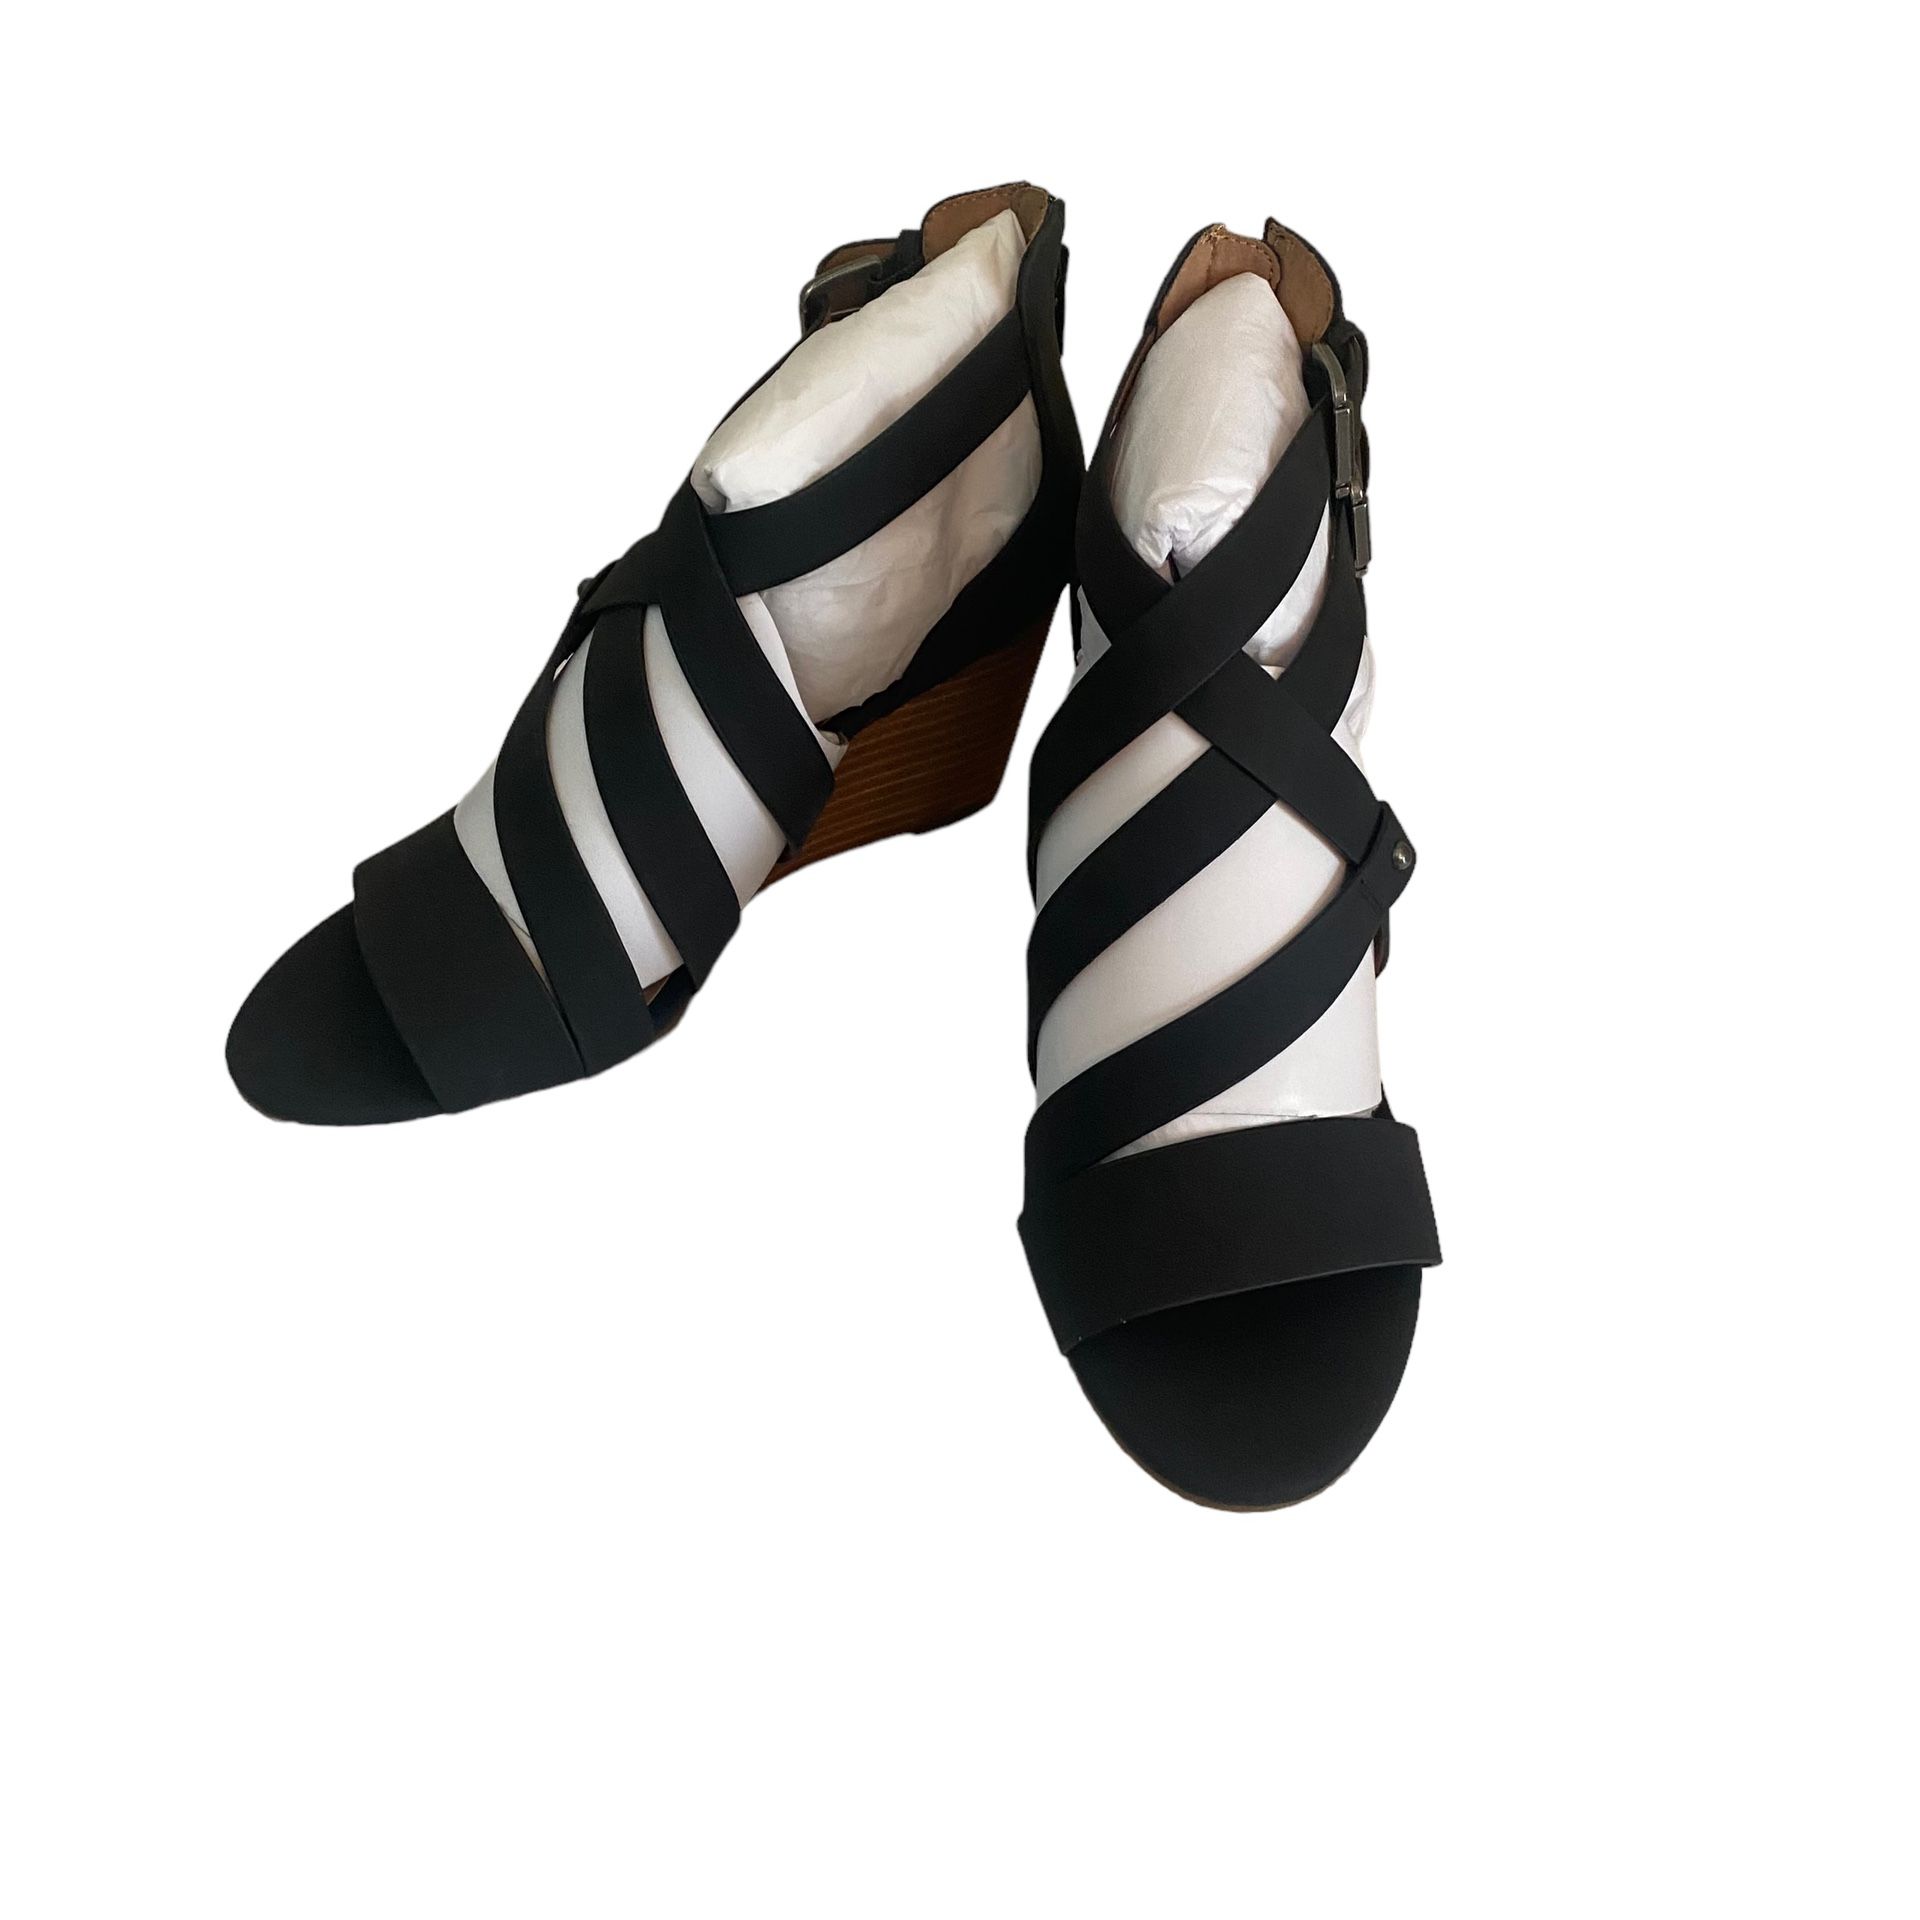 Crown Vintage Strappy Sandals Wedge Heel Black Size 7.5